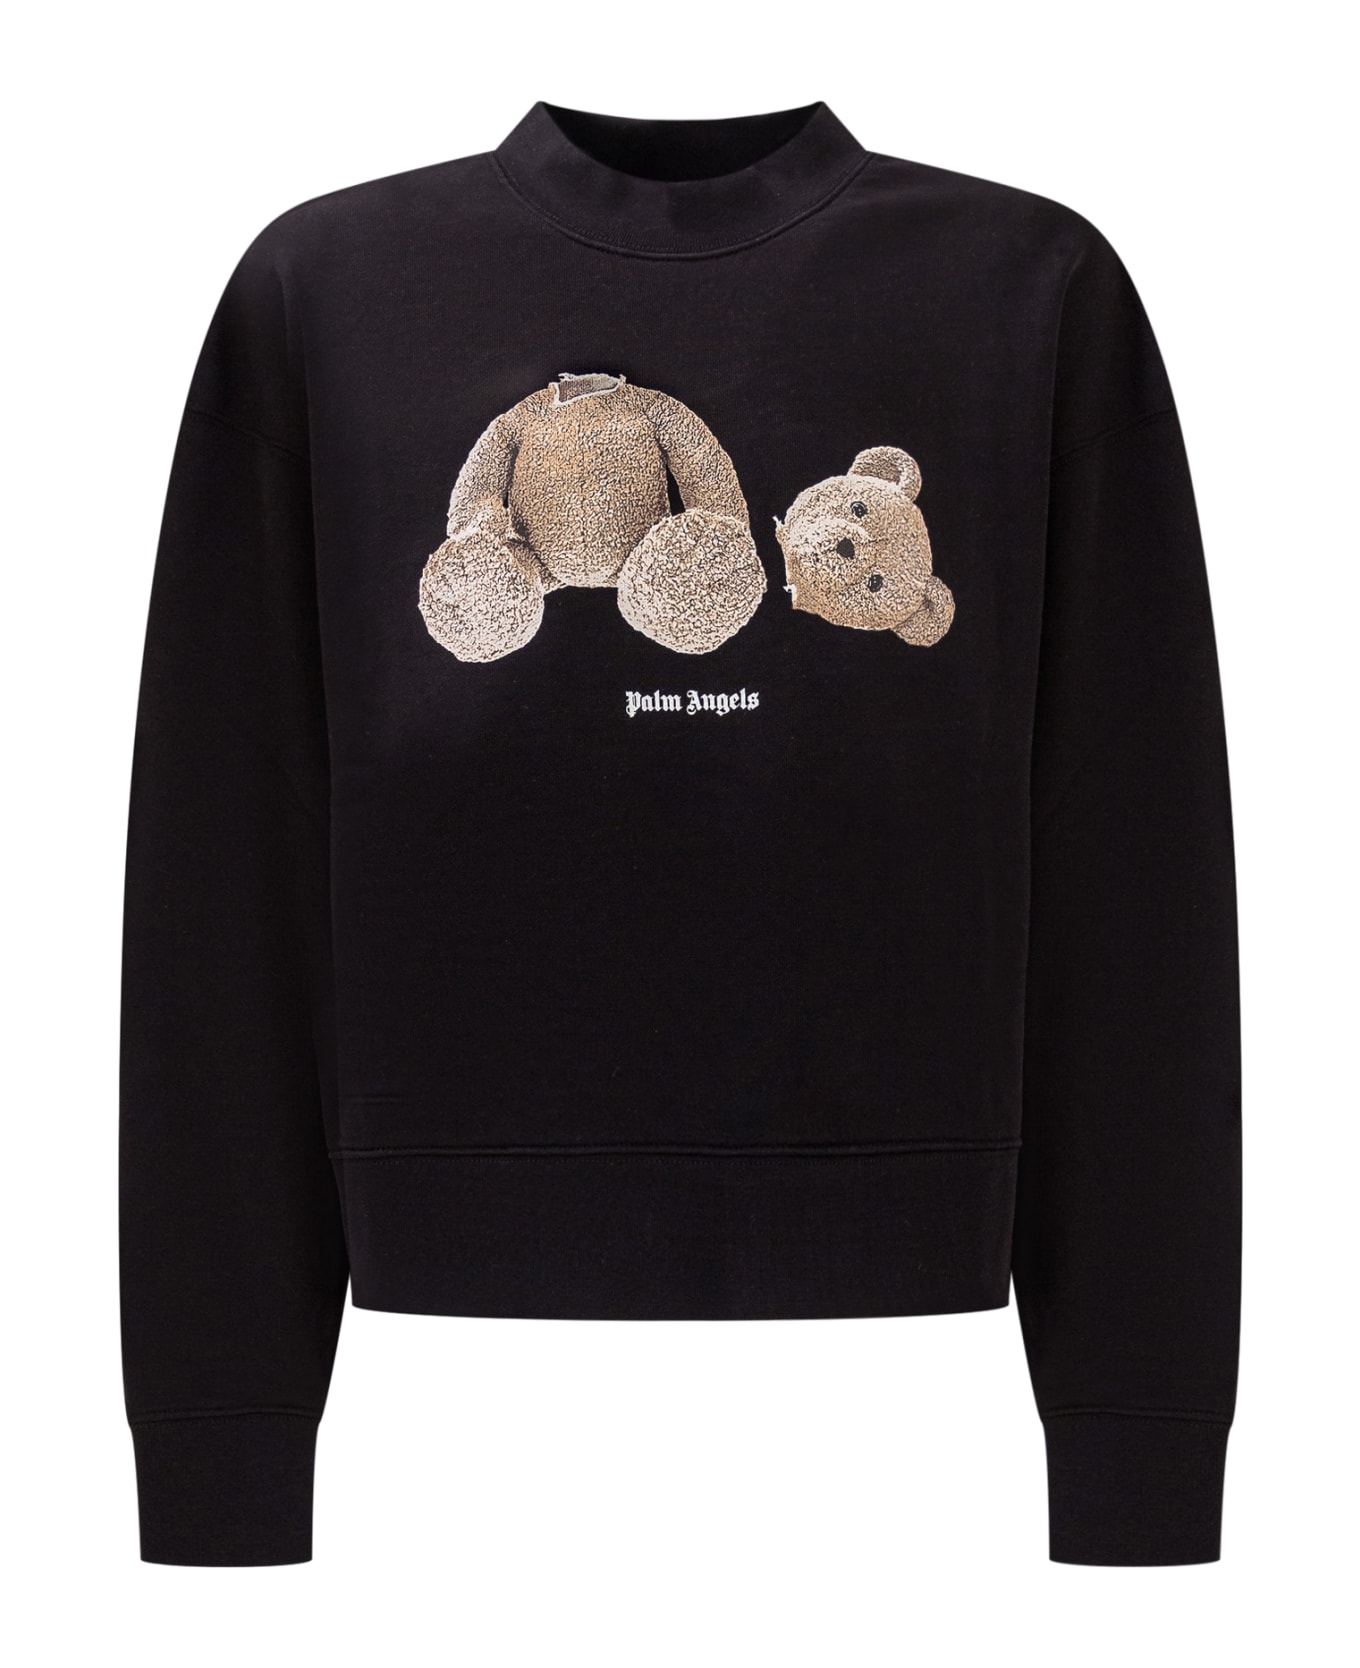 Palm Angels Teddy Bear Sweatshirt - BLACK BROWN